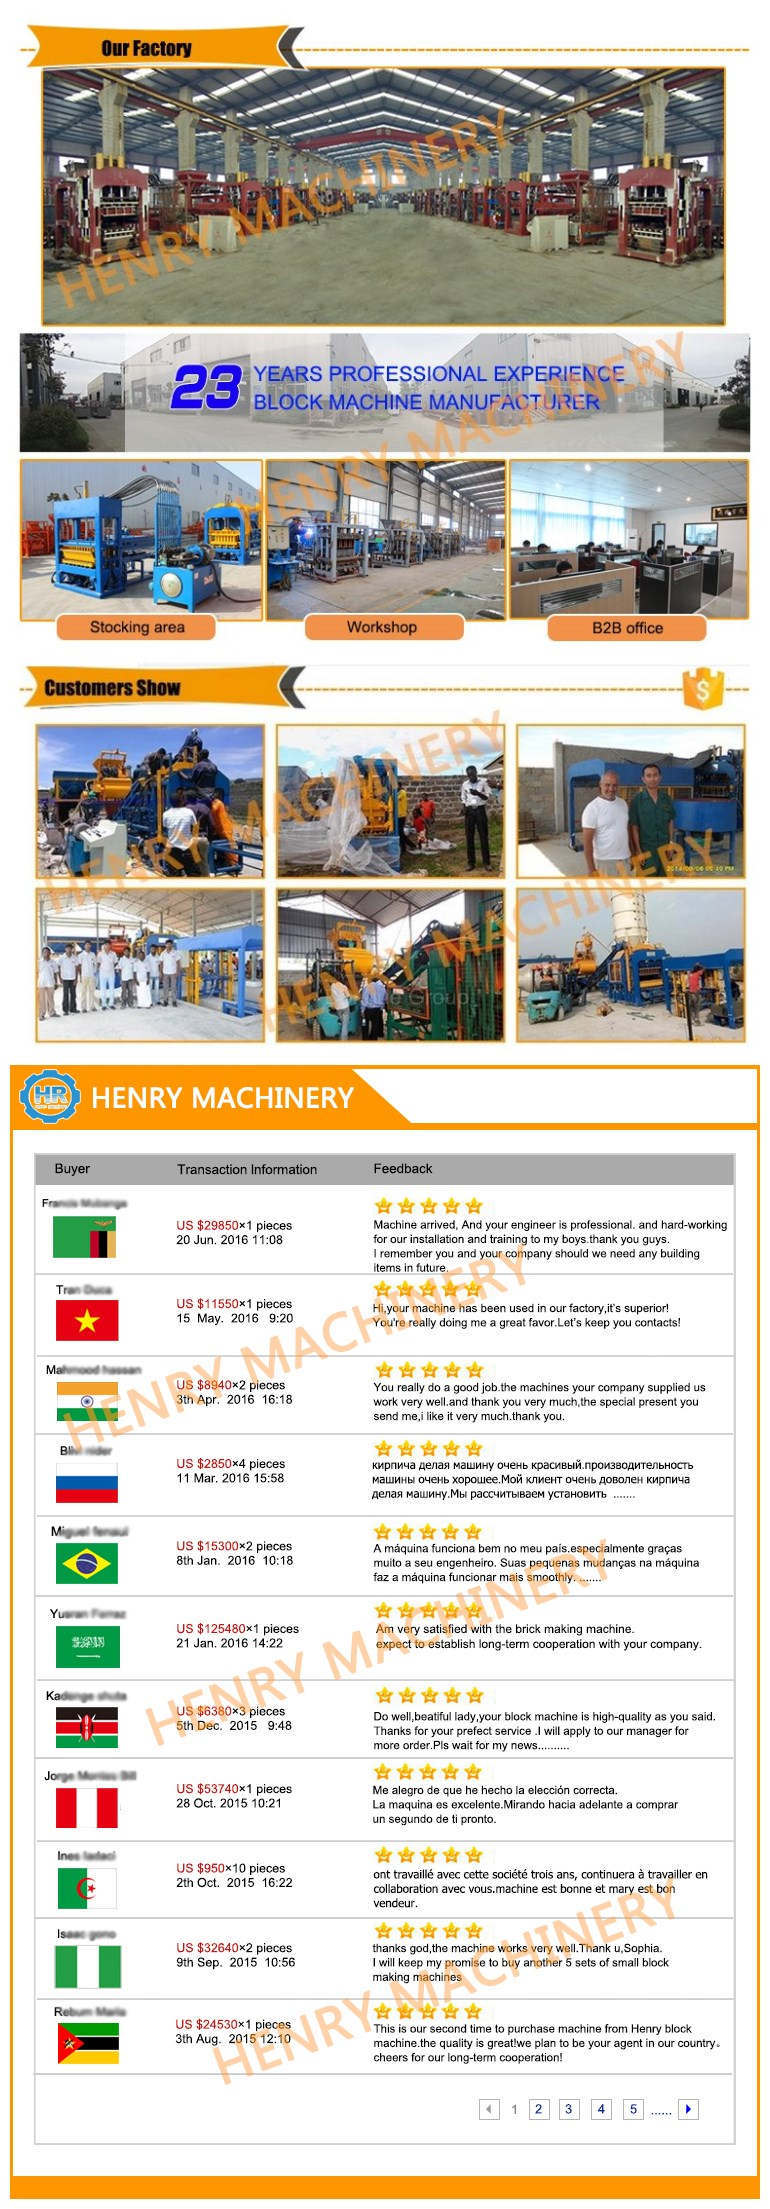 Henry Hr4-14 Automatic Soil Interlocking Brick Machine New Technology of High Capacity Clay Brick Machine